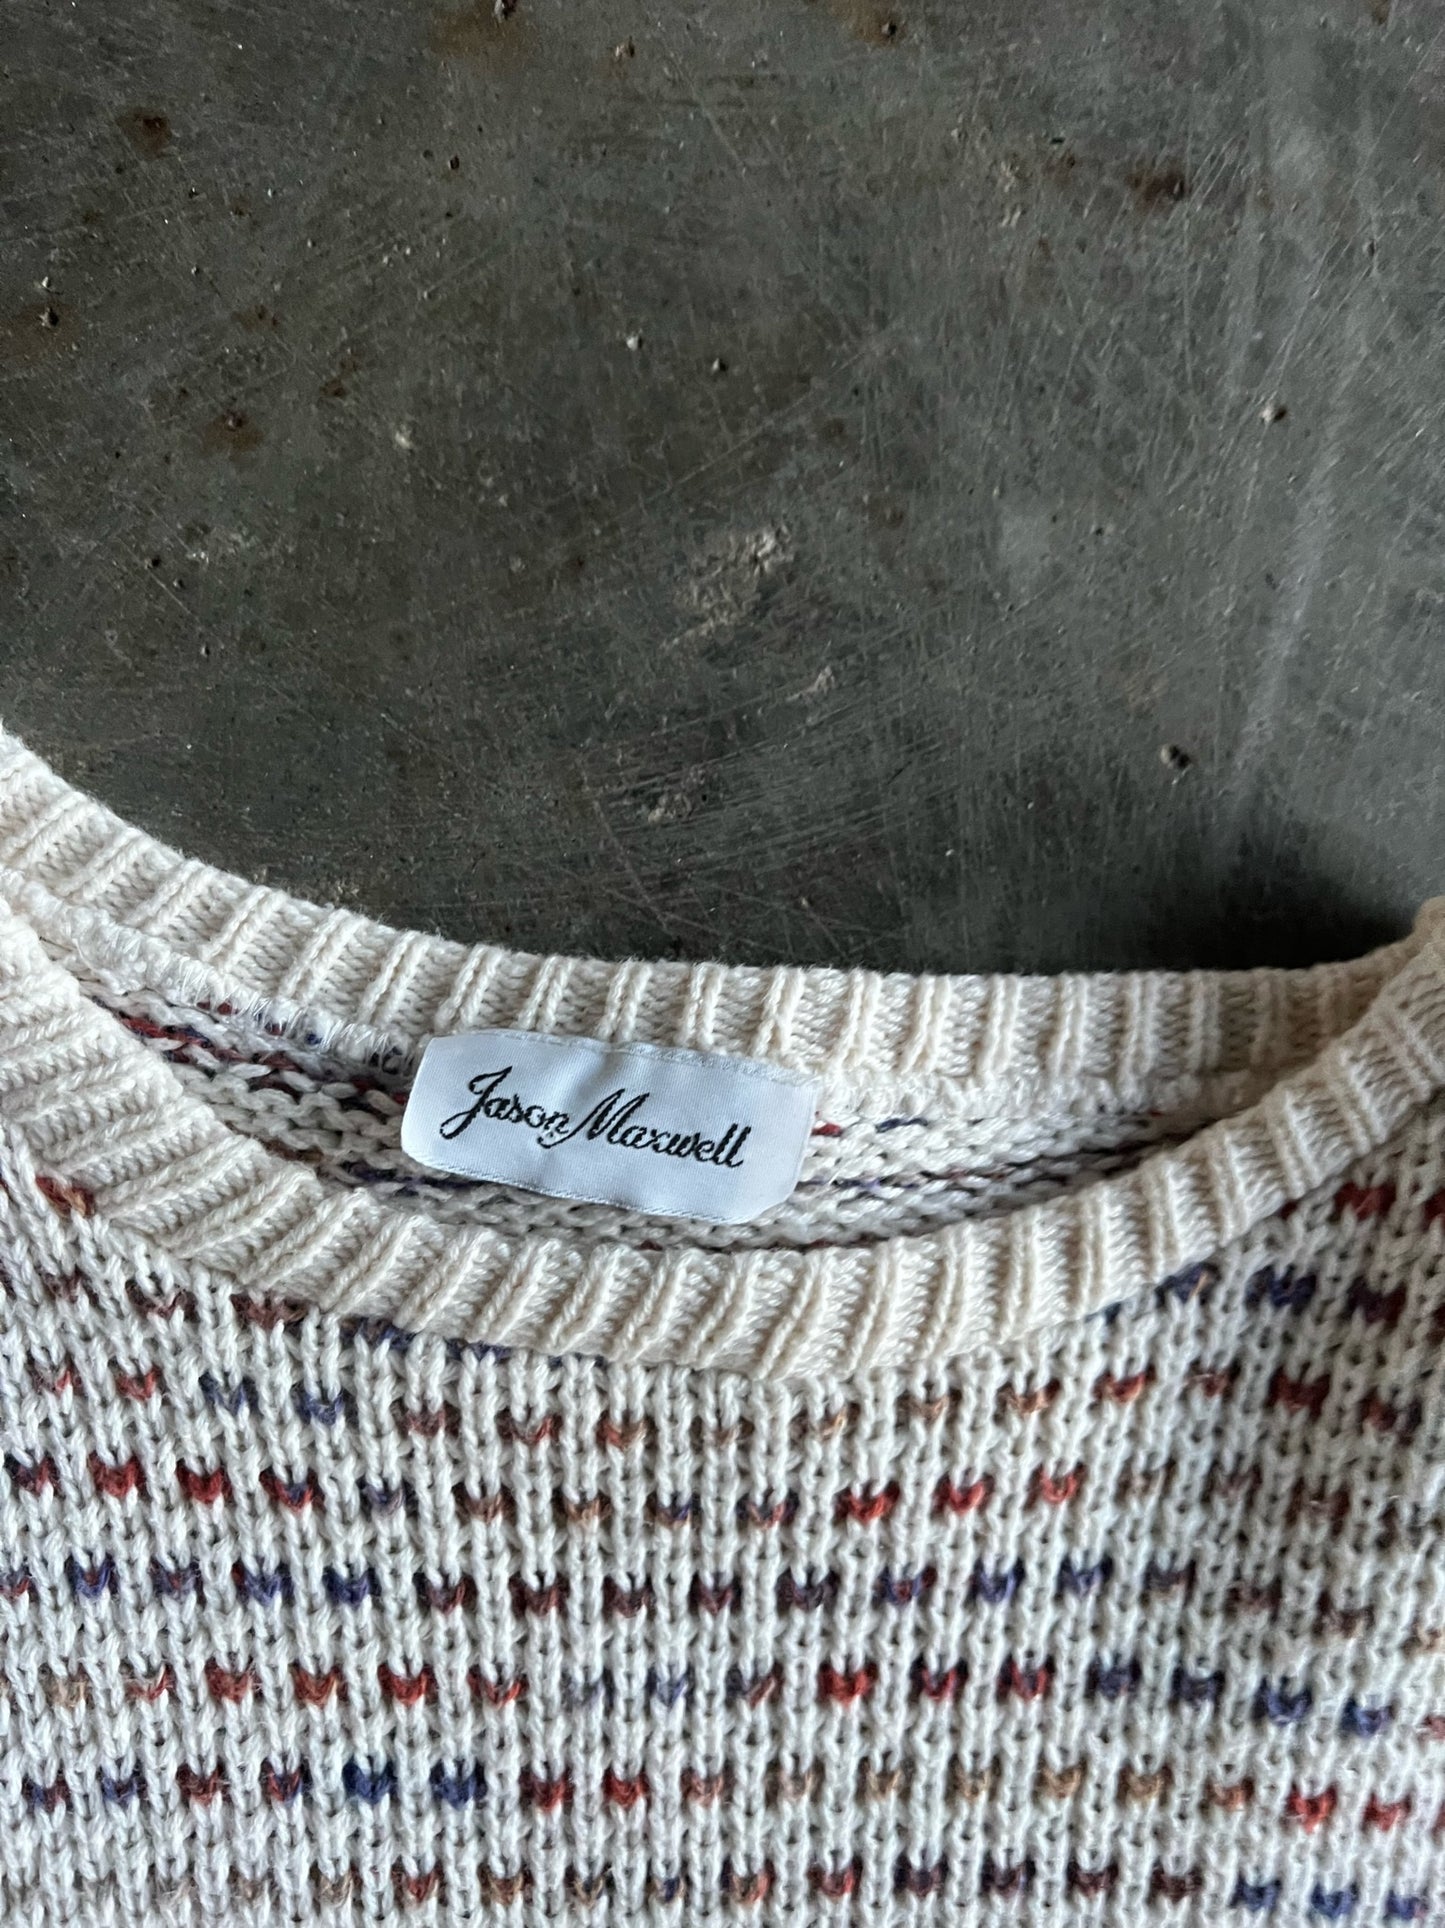 Vintage Jason Maxwell Knit Sweater - S